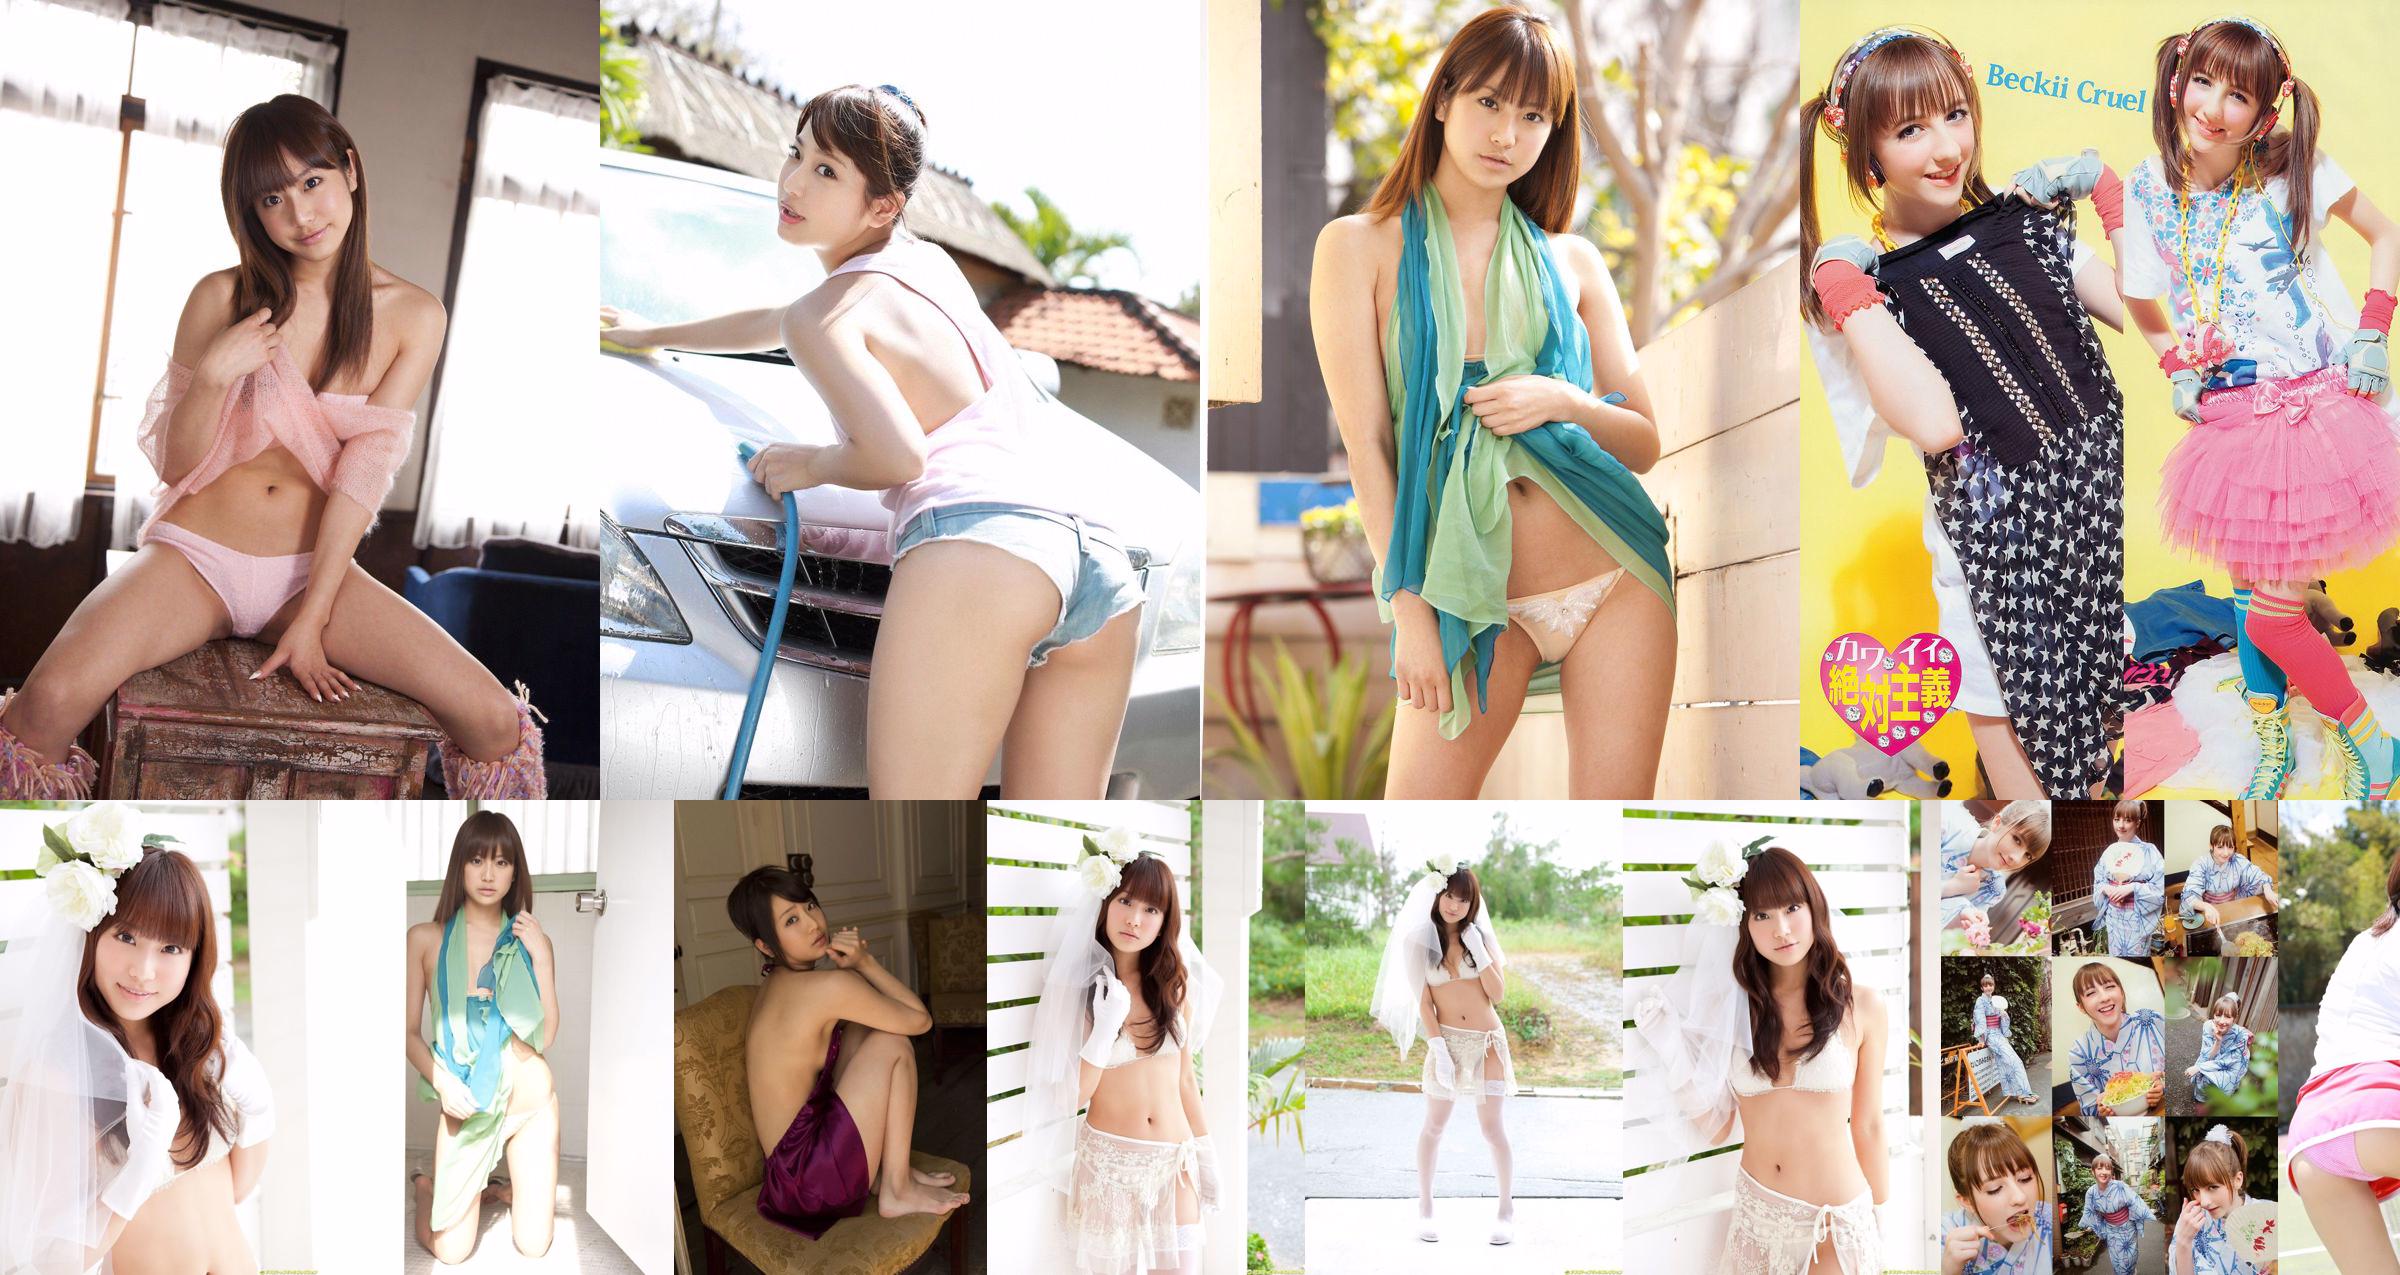 Asakura Mina / Asakura Mina "Charmina" [Sabra.net] Strictly Girls No.59b743 Pagina 1